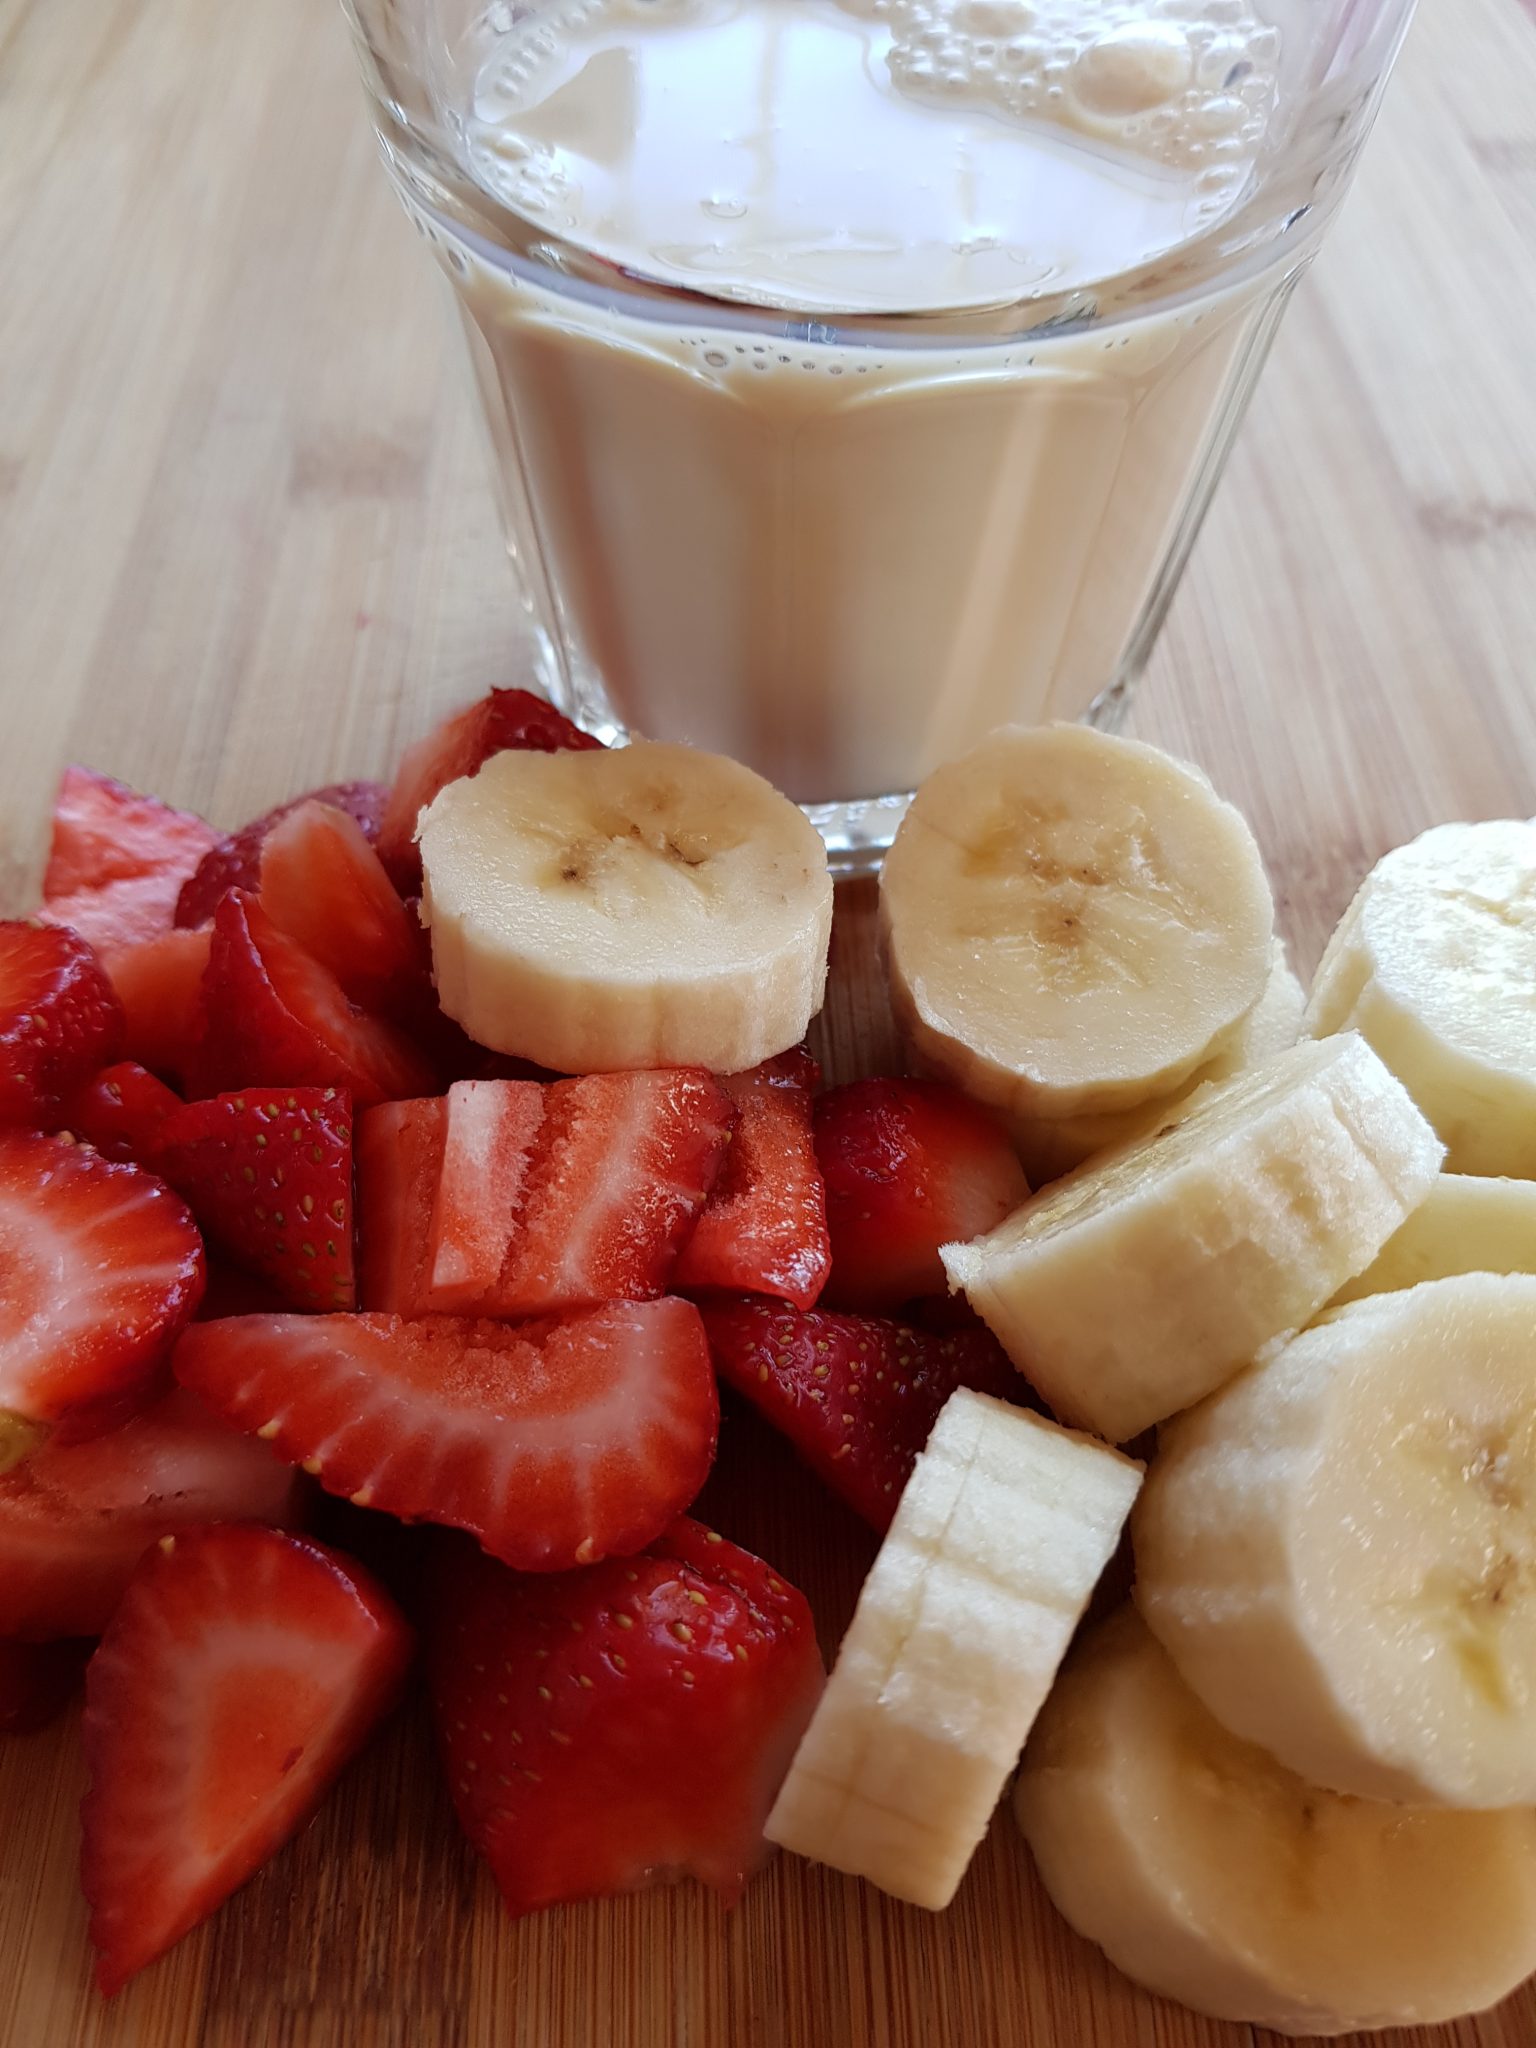 Strawberry, banana and vanilla milk smoothie